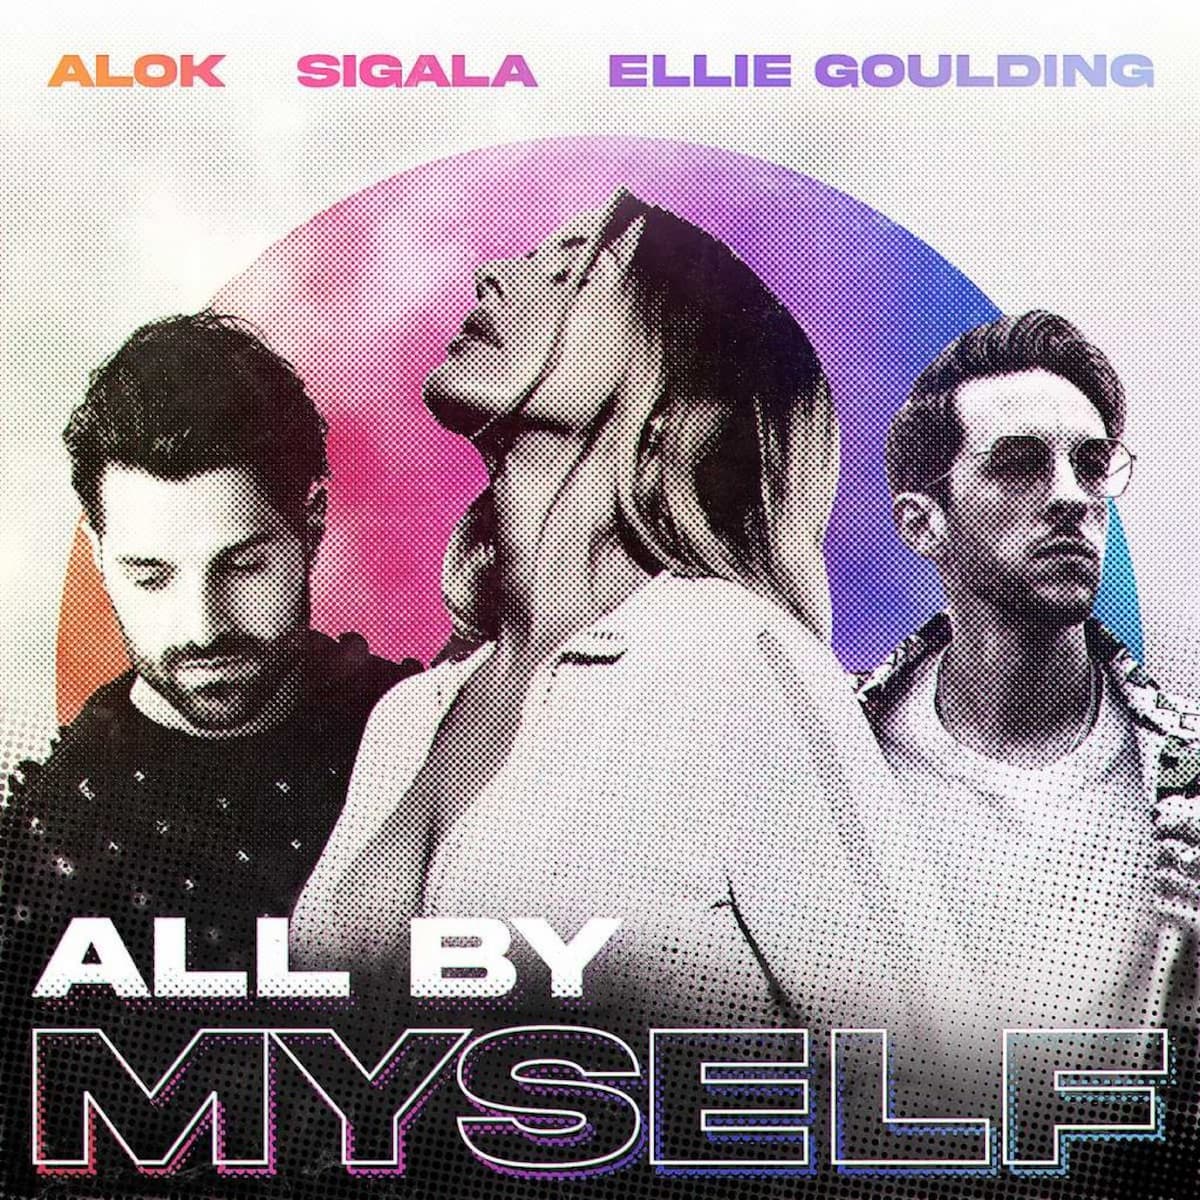 Alok, Ellie Goulding e Sigala apresentam novo single "All By Myself"